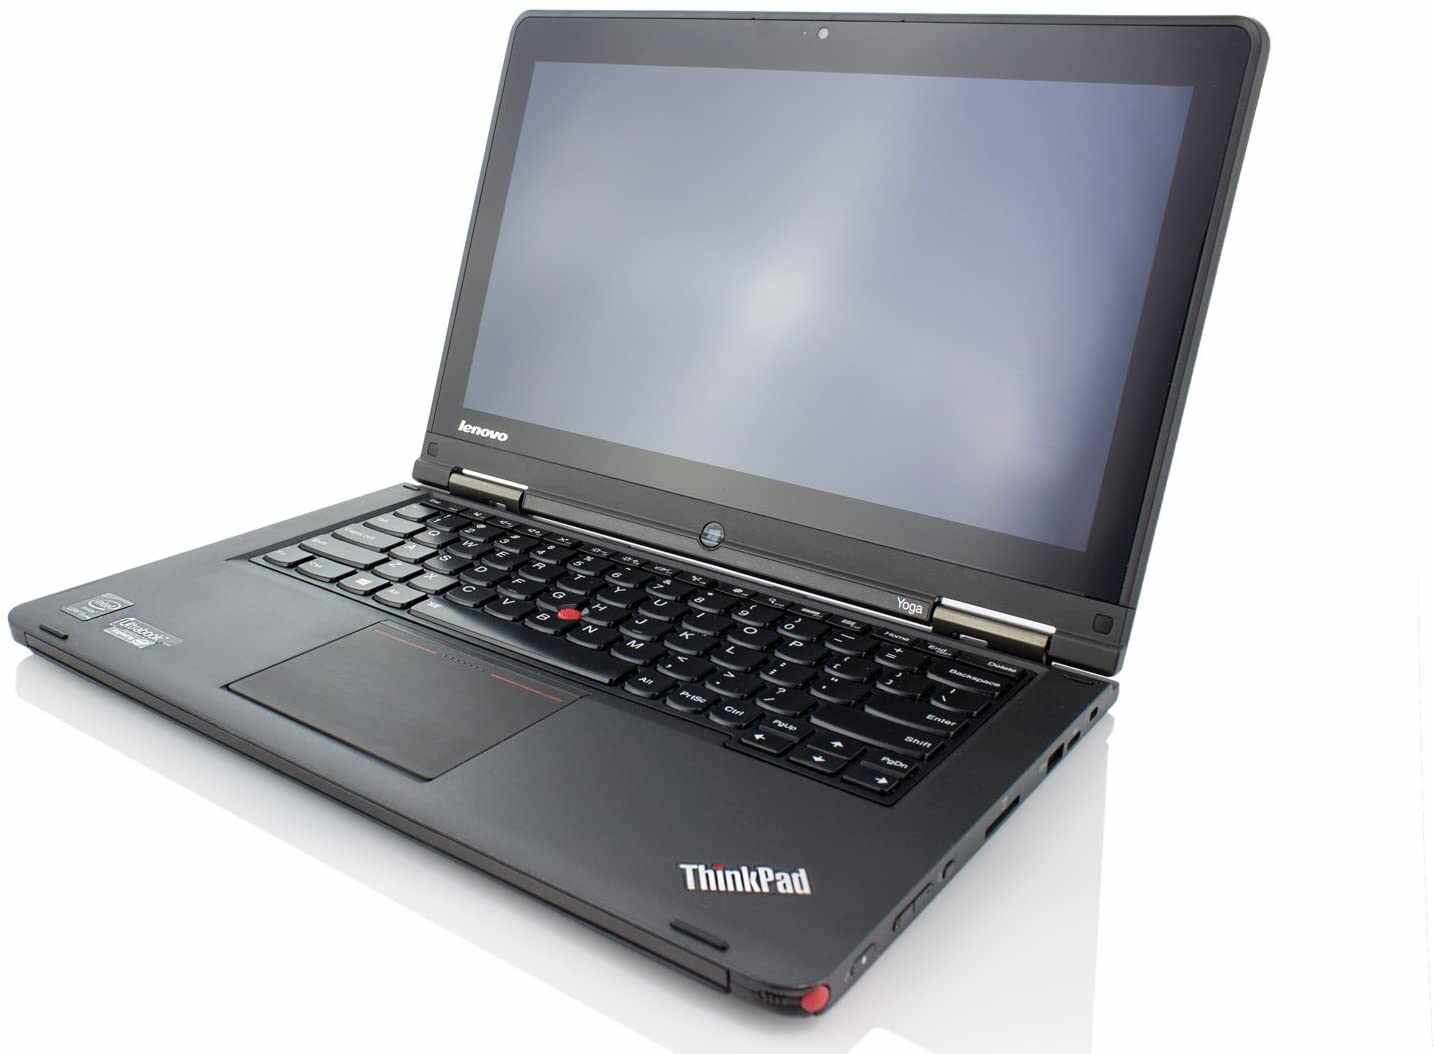 Laptop Lenovo Yoga 20C0, Intel Core i5-4300U 1.90GHz, 8GB DDR3, 120GB SSD, 12.5 Inch TouchScreen, Webcam, Grad B (0297)